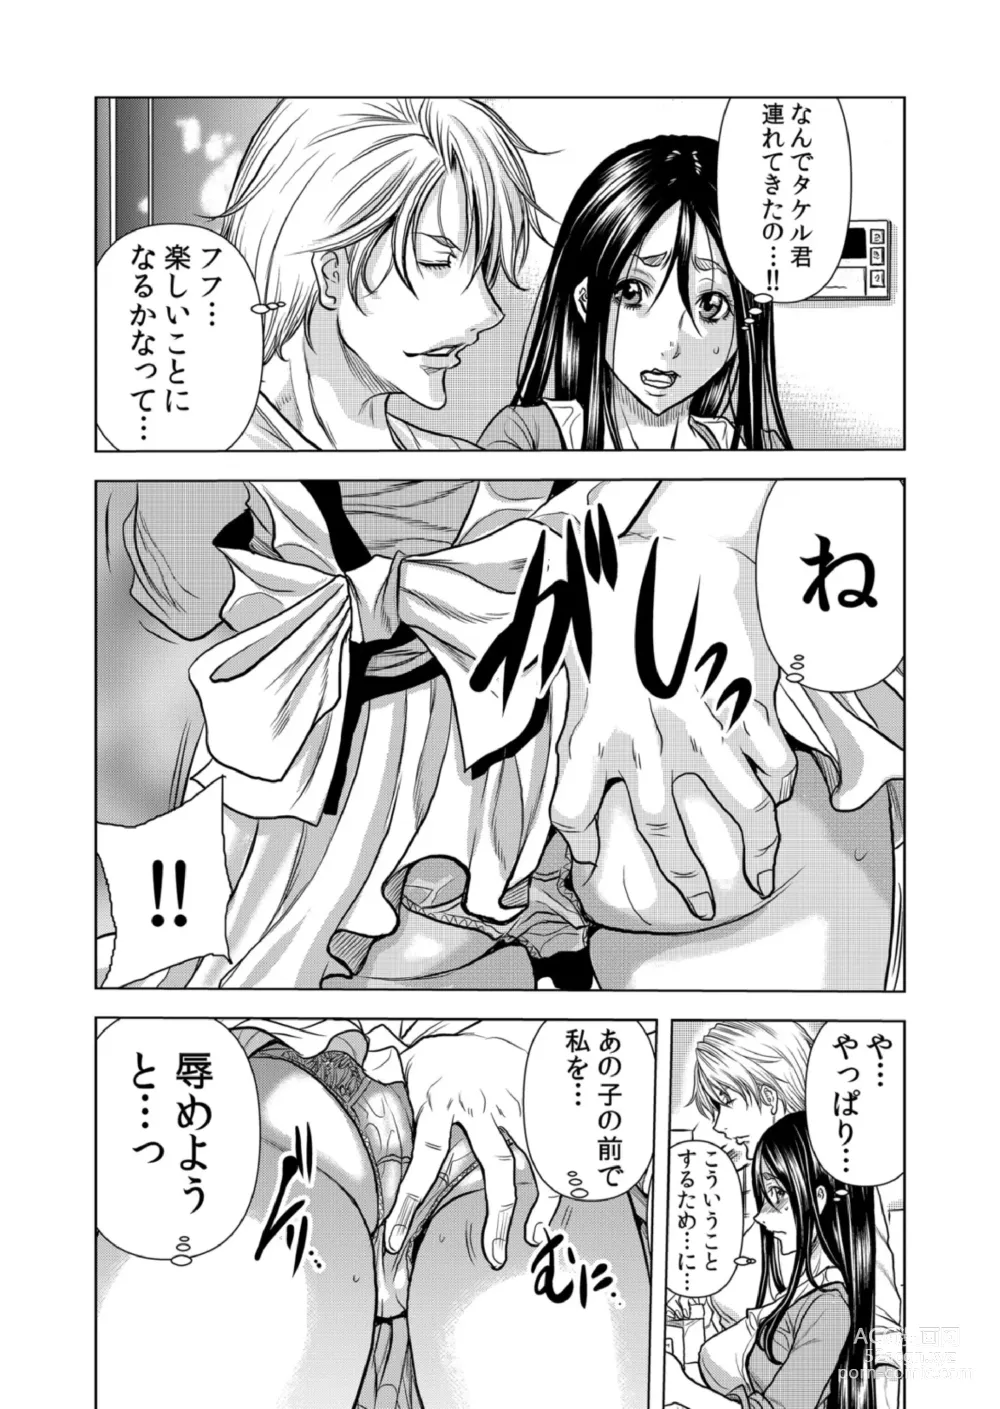 Page 6 of manga Mamasan,yobai ha OK desuka? VOL9